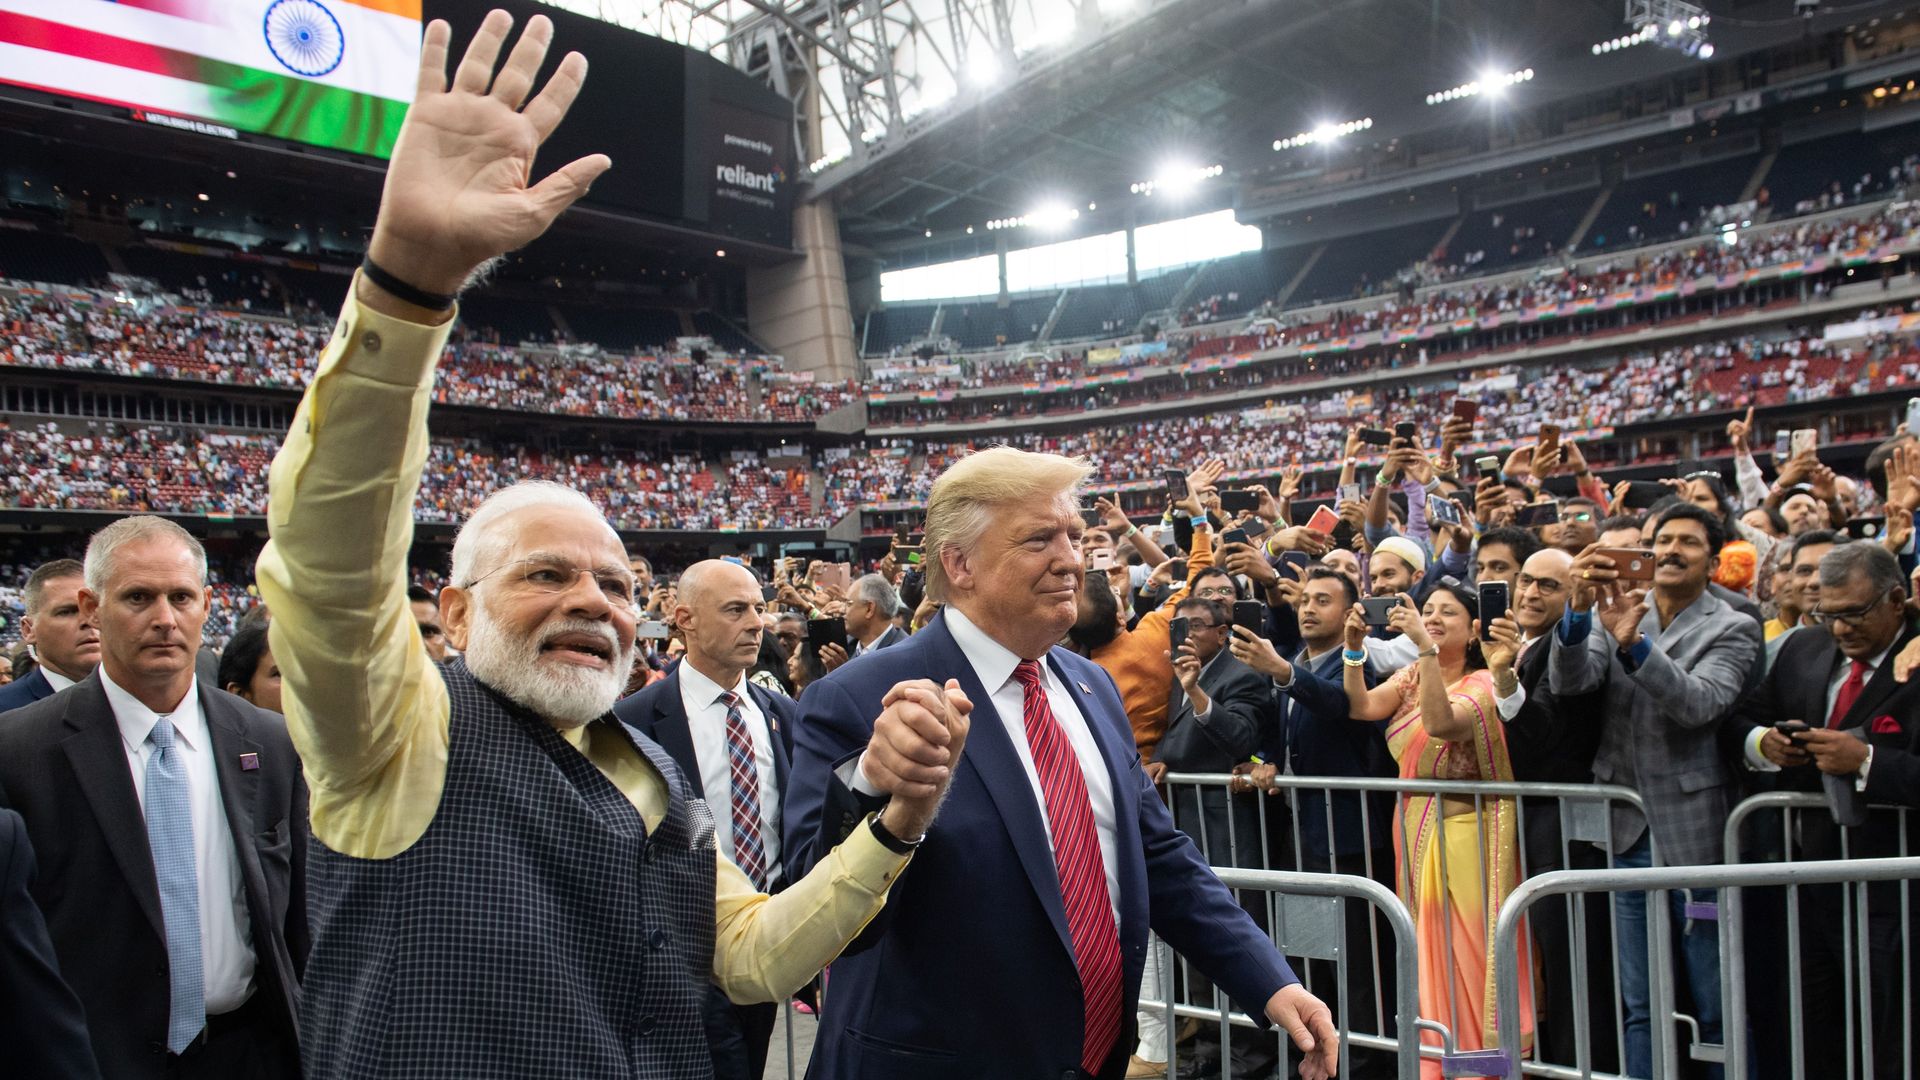 President Donald Trump and Indian Prime Minister Narendra Modi attend "Howdy, Modi!" at NRG Stadium in Houston, Texas, September 22